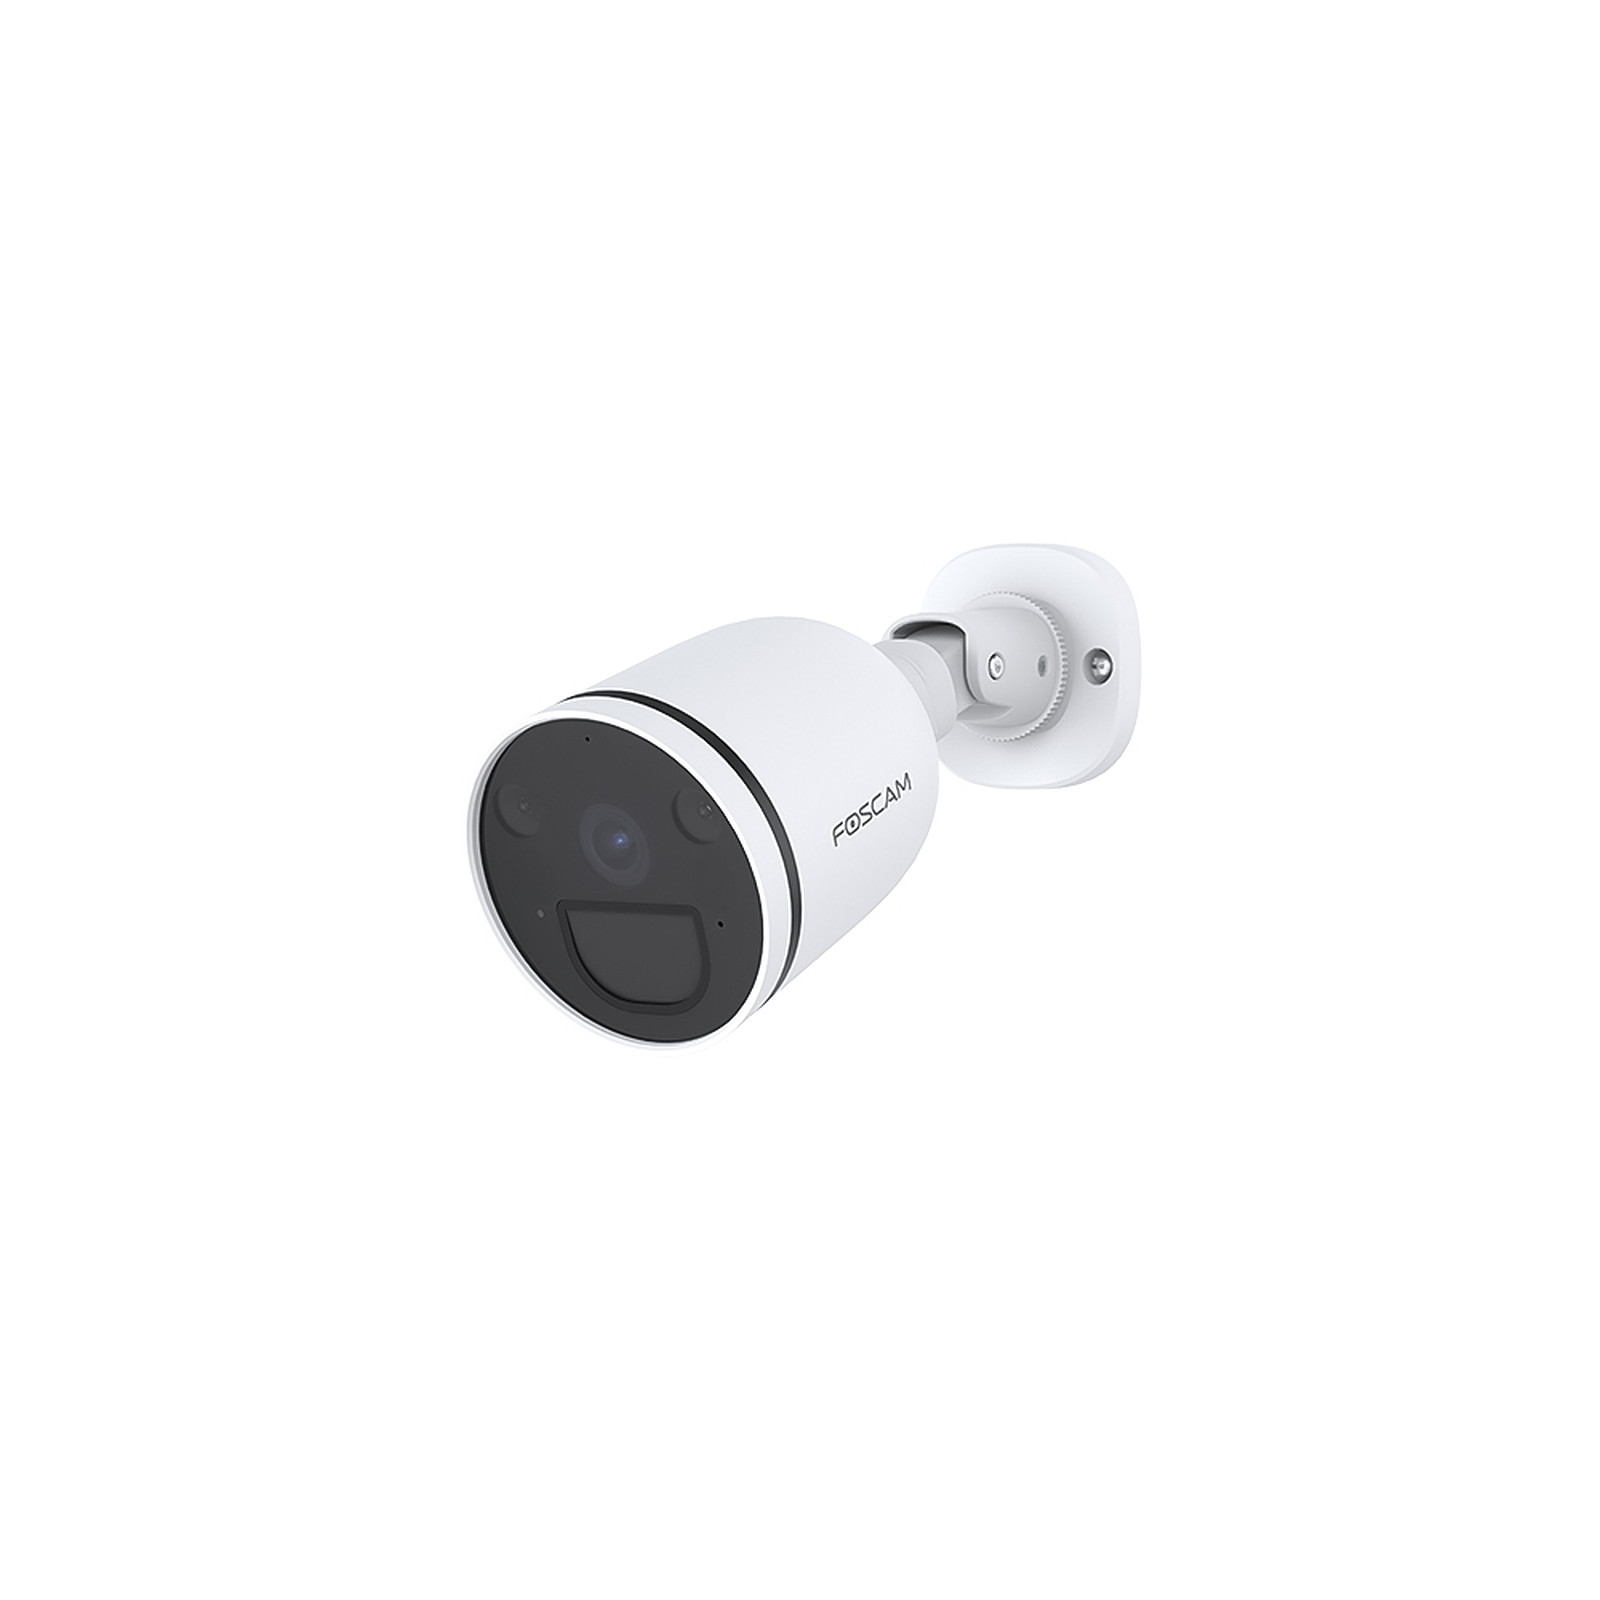 Foscam - S41 - Camera IP Wifi exterieure avec spots lumineux - Camera de surveillance Foscam